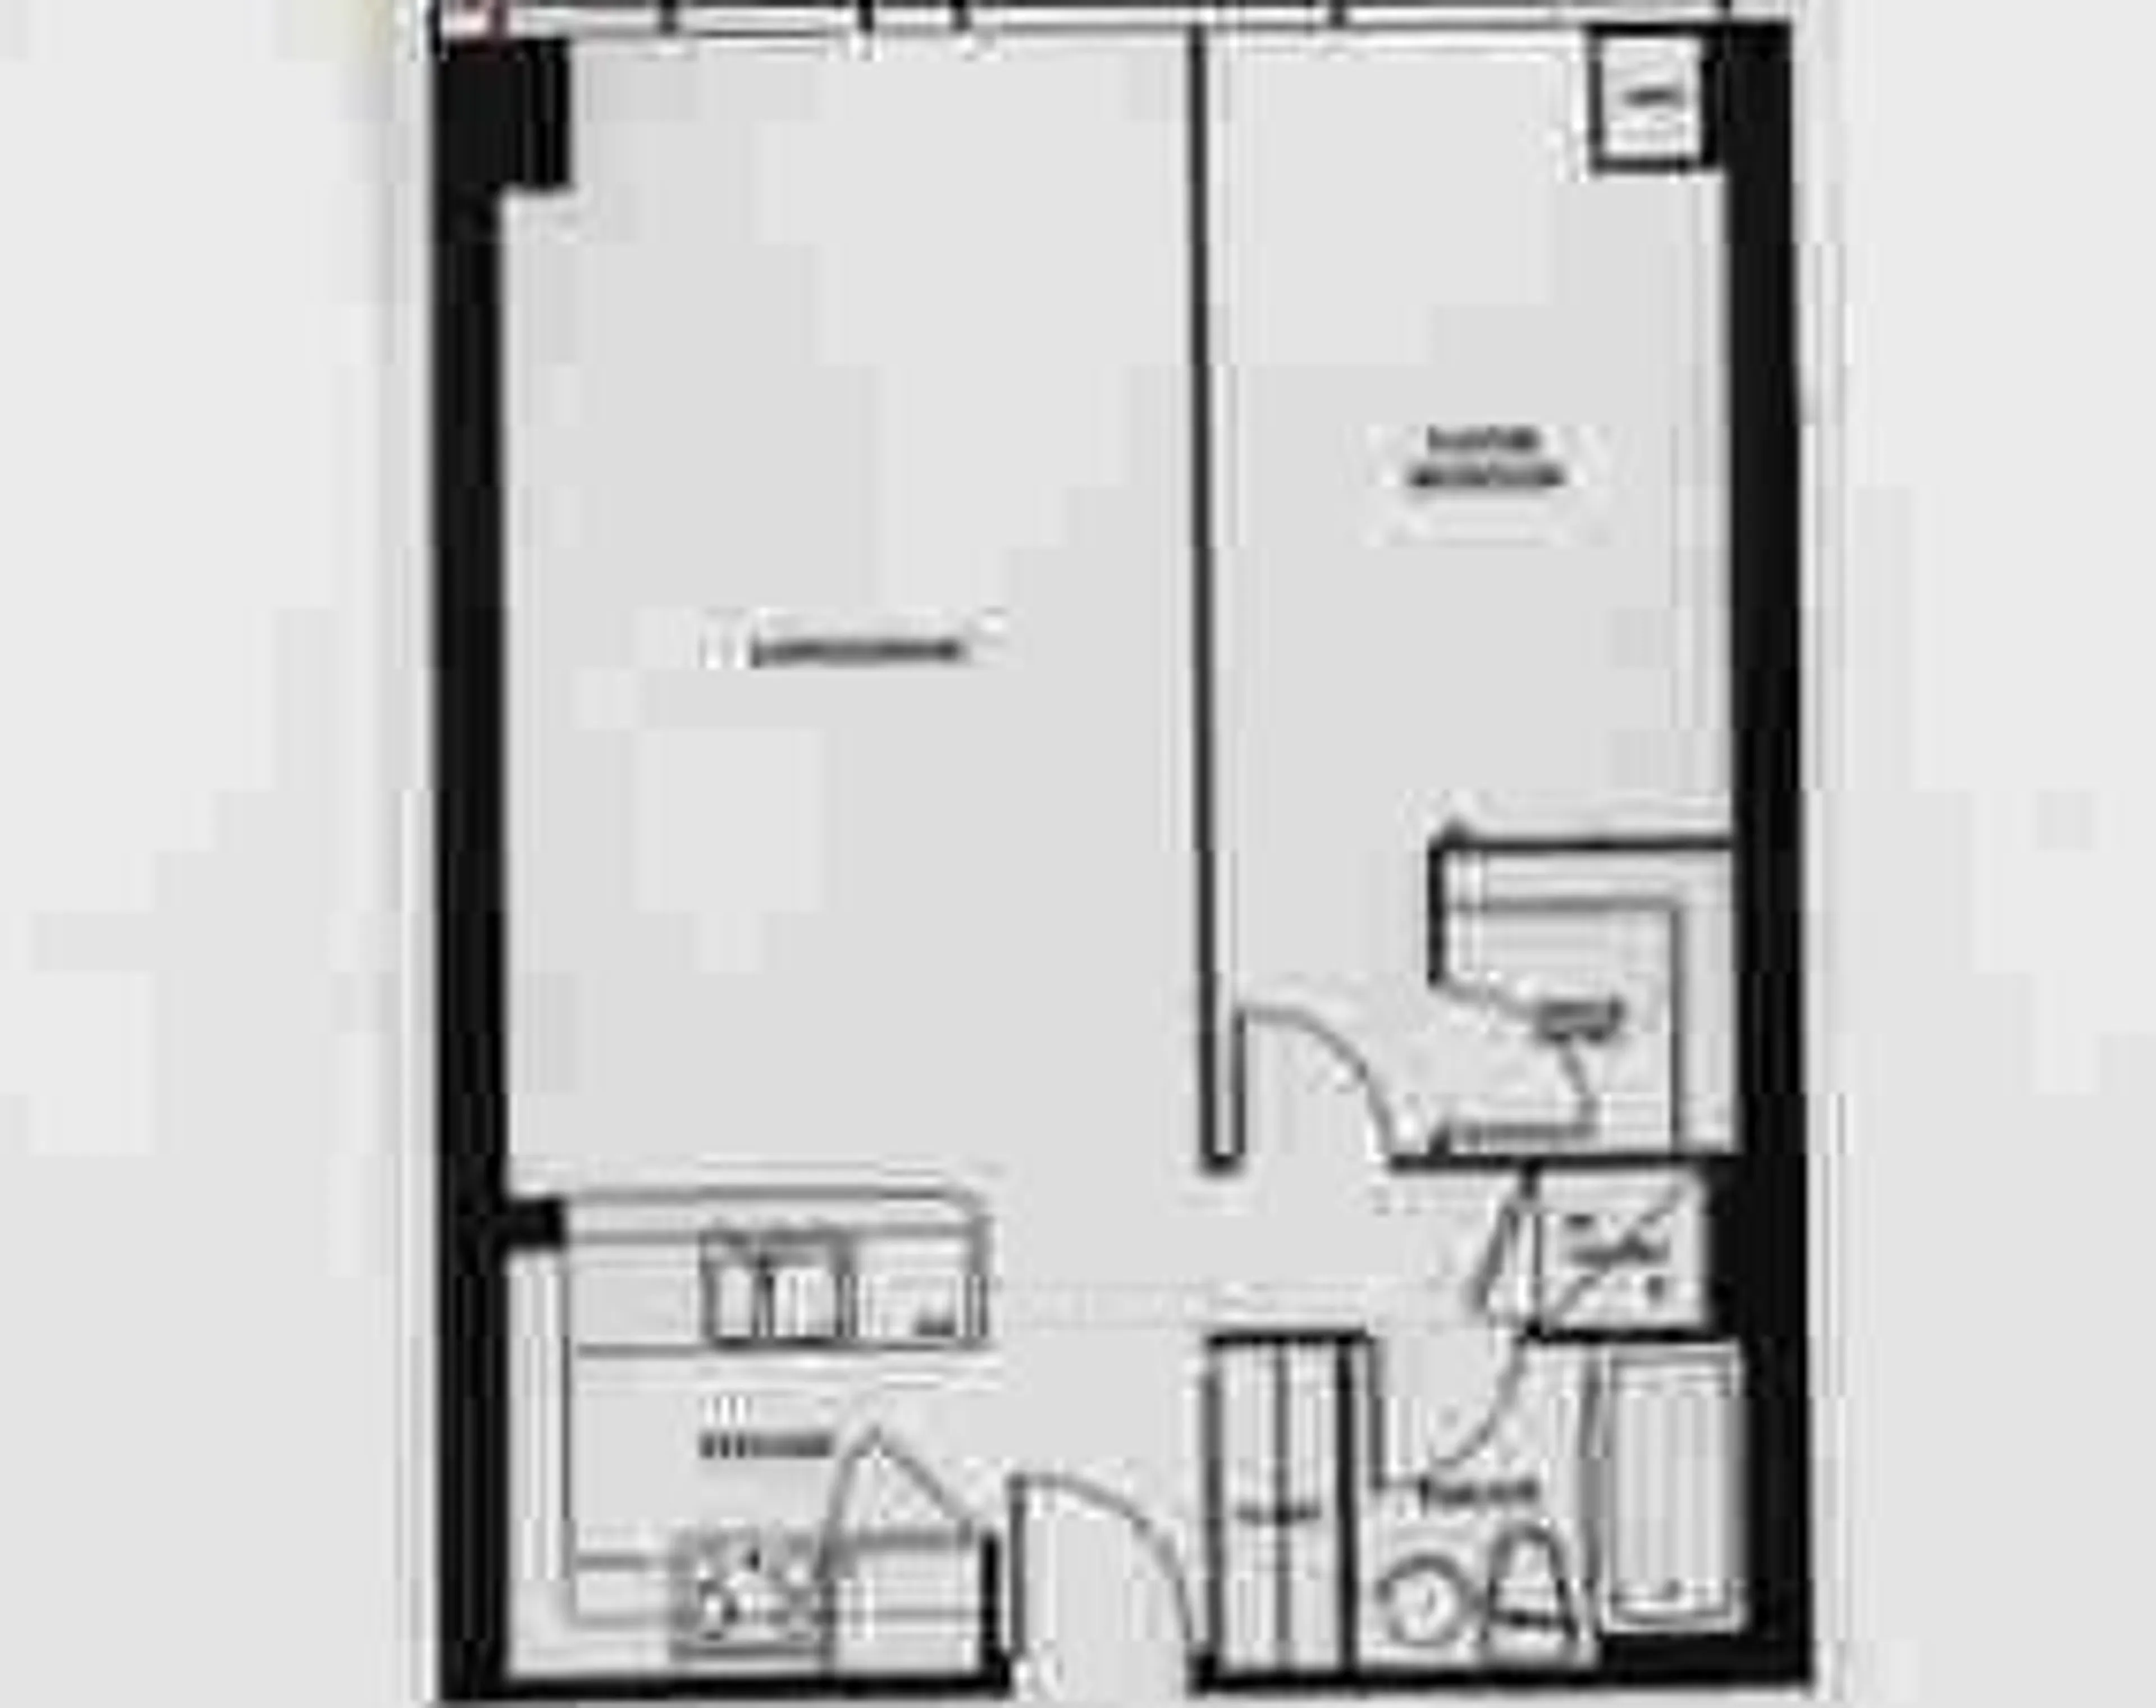 Floor plan for 210 Victoria St #3806, Toronto Ontario M5B 2R3